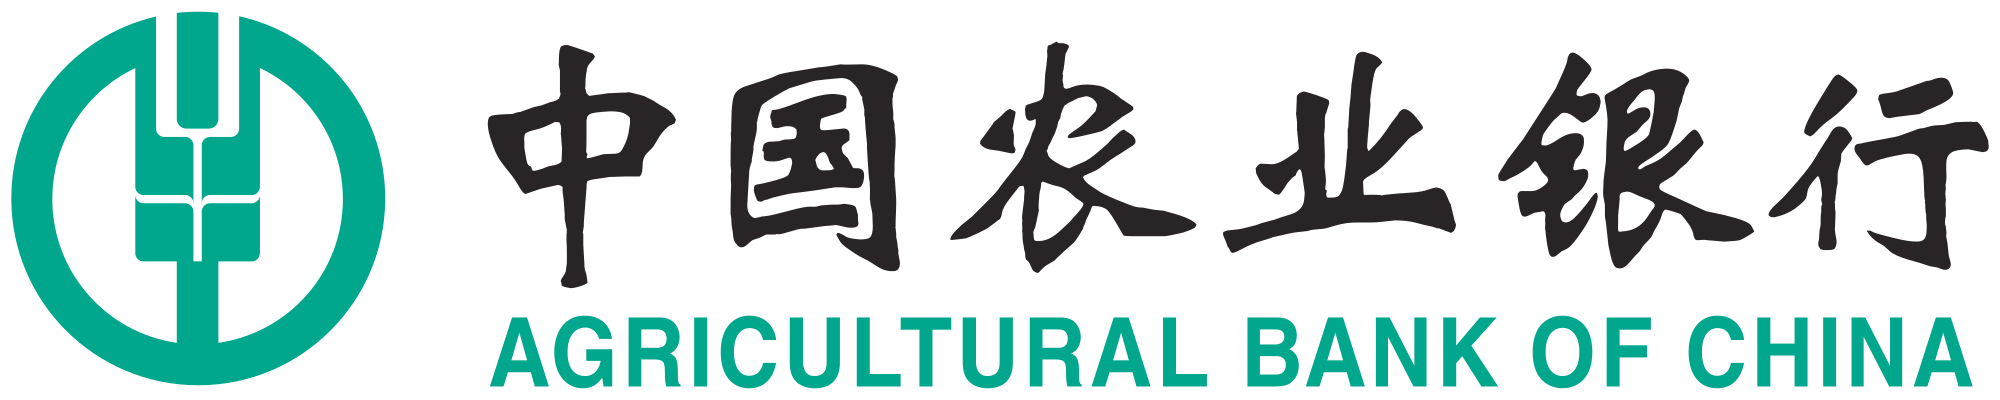 Logo Agricultural Bank Of China PNG - 33725